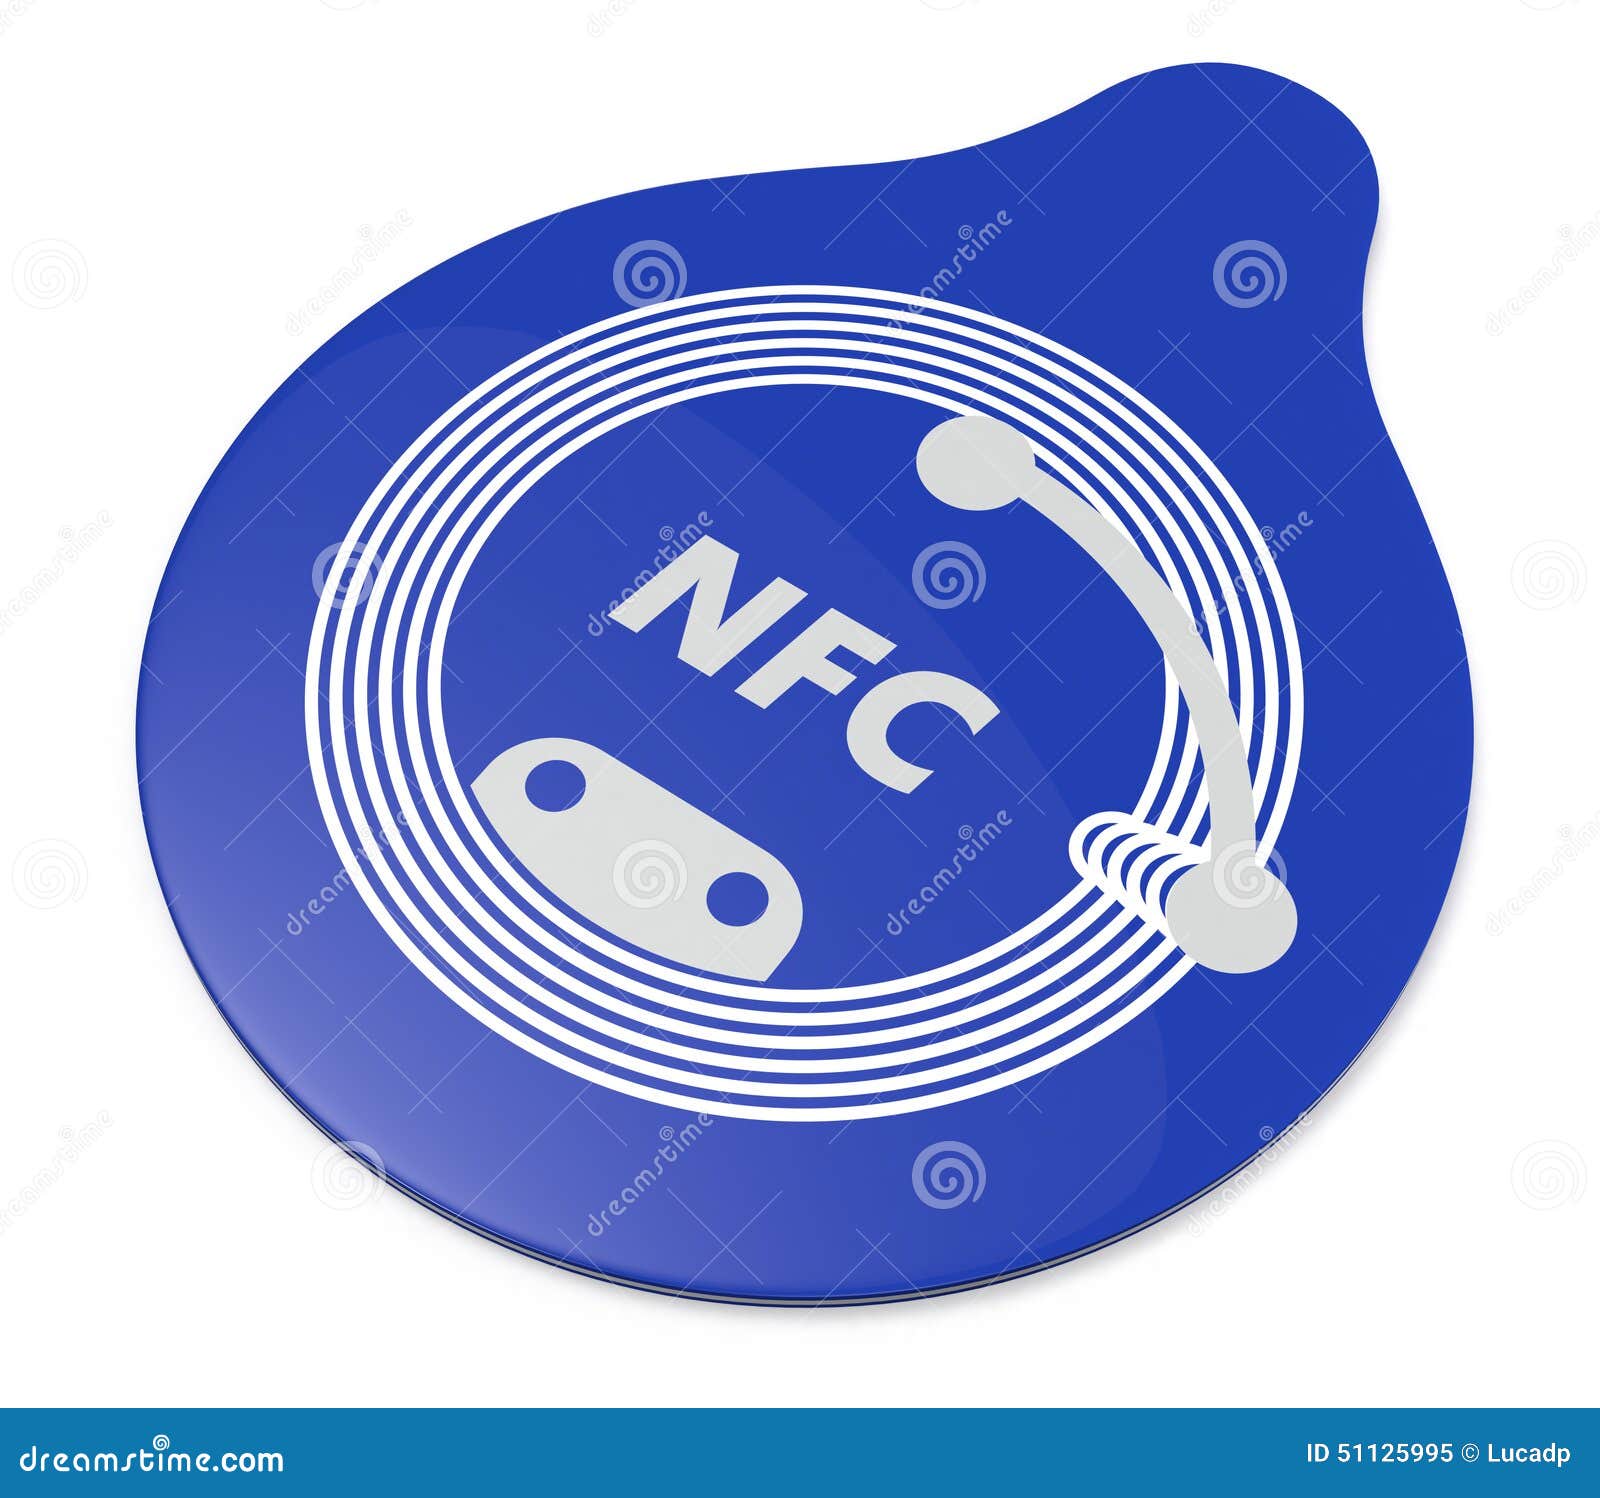 Nfc tag stock illustration. Illustration of mobile, business